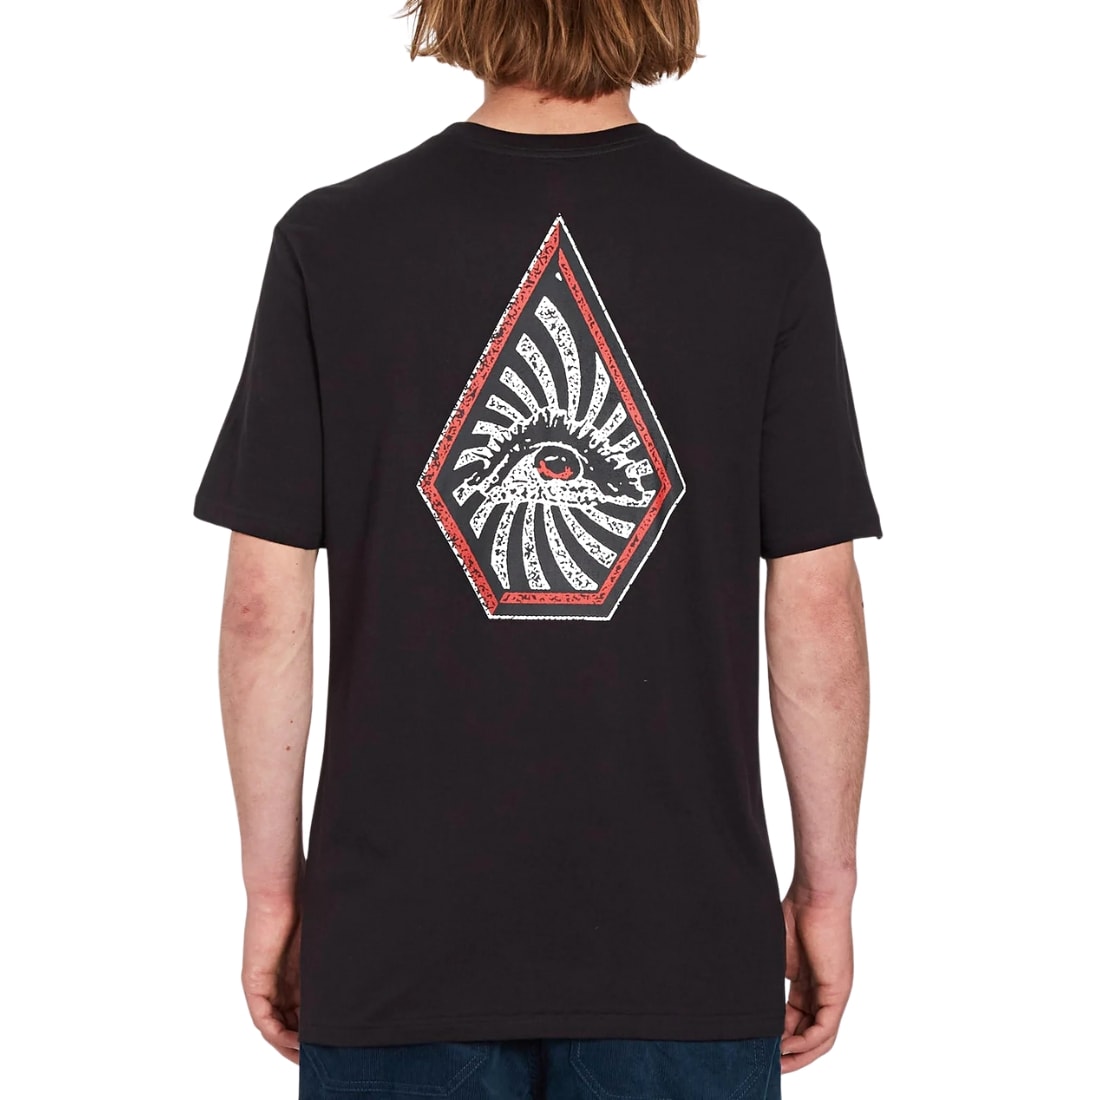 Volcom Surf Vitals Jack Robinson T-Shirt - Black - Mens Graphic T-Shirt by Volcom